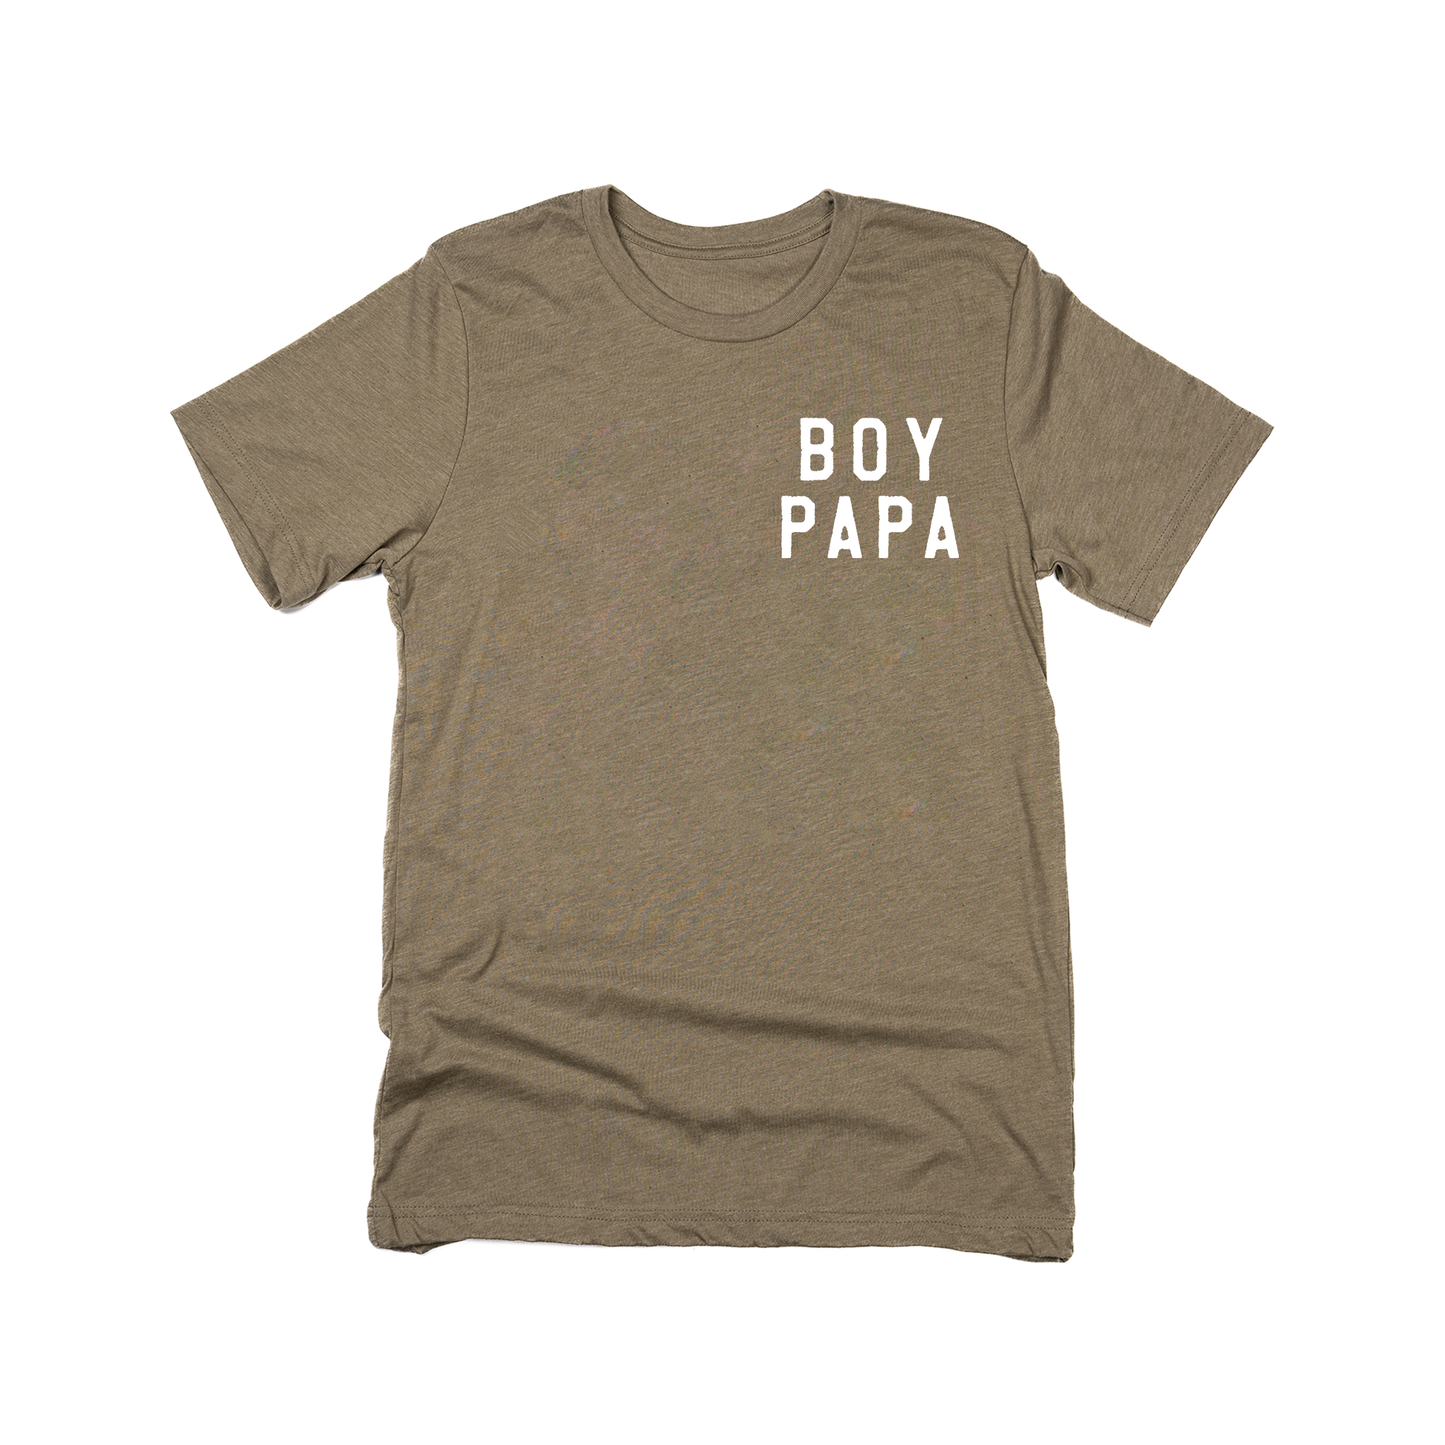 Boy Papa (Pocket, White) - Tee (Olive)